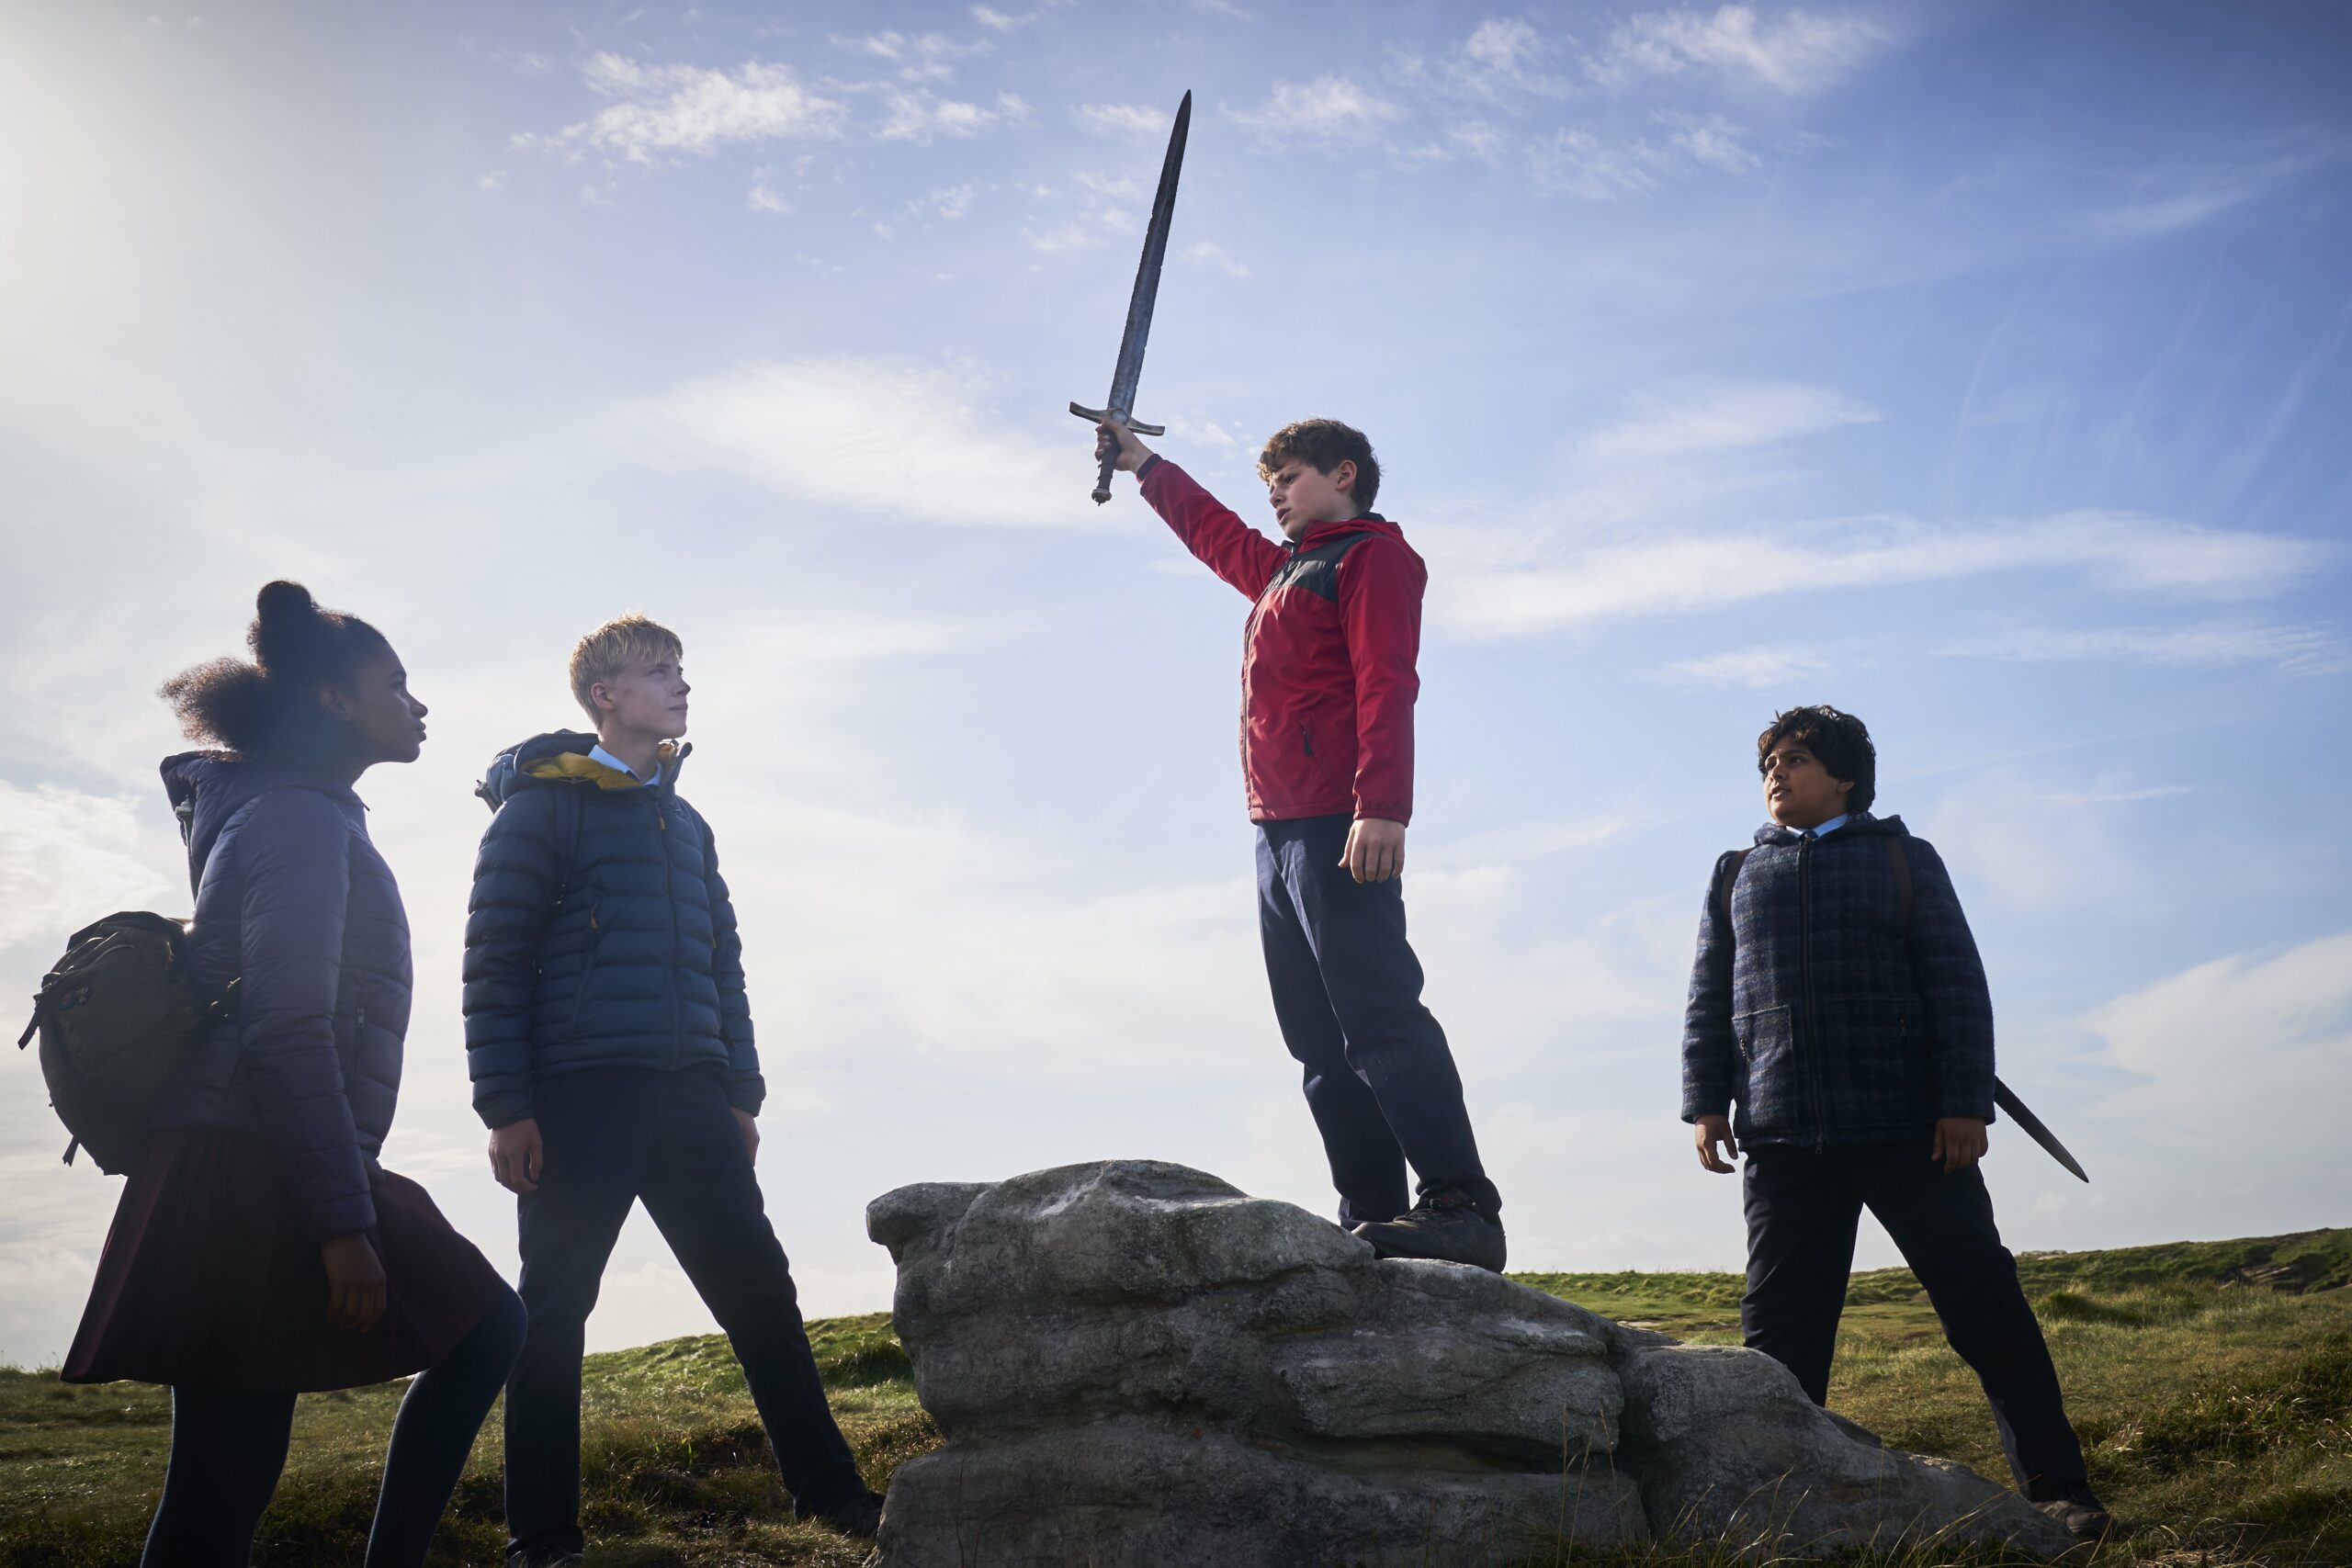 Louis ashbourne Serkis as Alex, standing on a rock holding up a sword